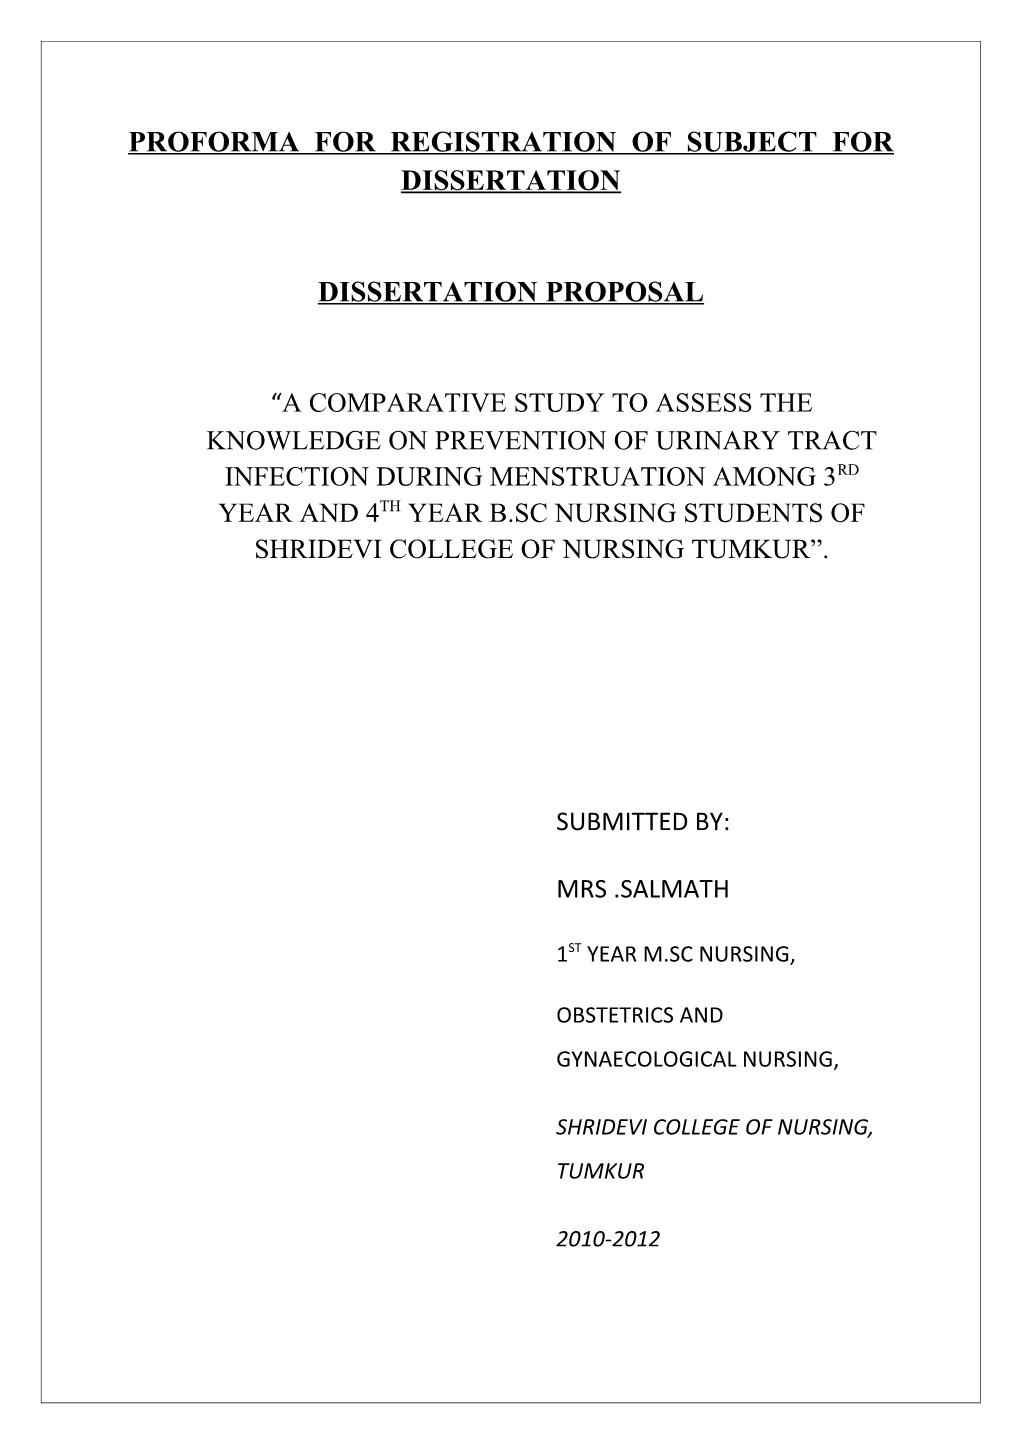 Proforma for Registration of Subject for Dissertation s5